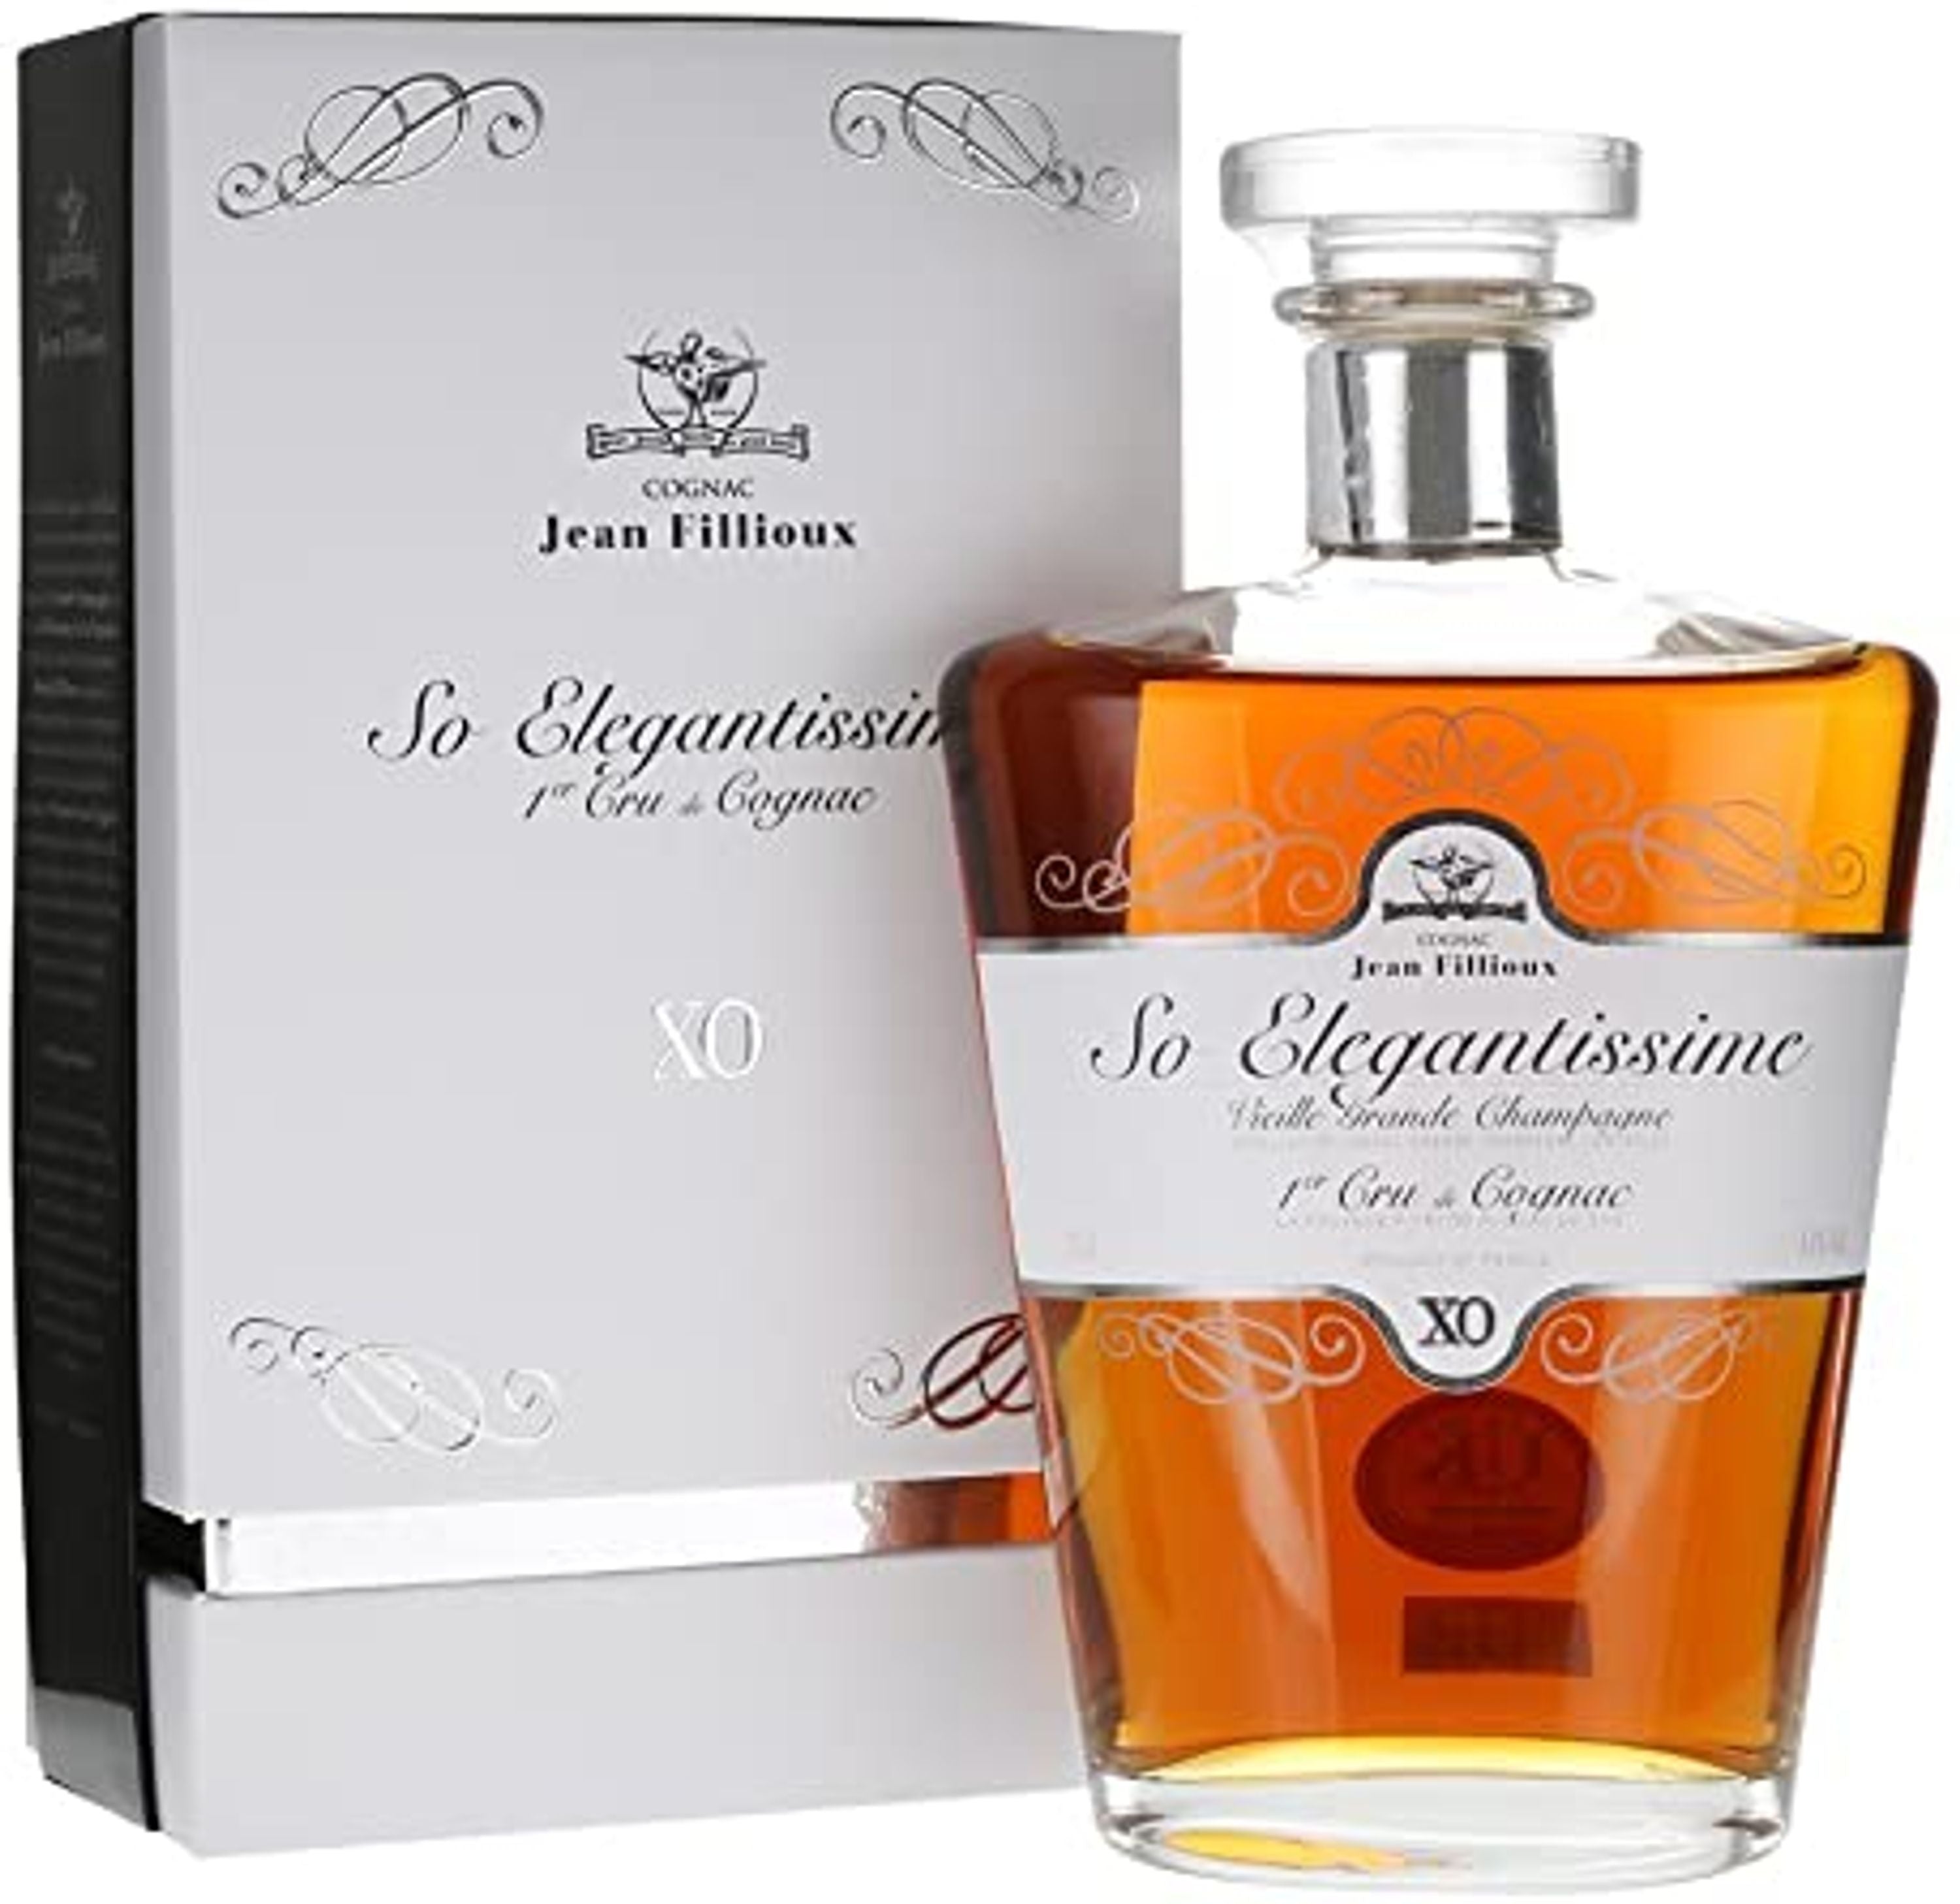 Jean Fillioux So Elegantissime XO 0,7l, alc. 41 Vol.-%, Cognac  Frankreich